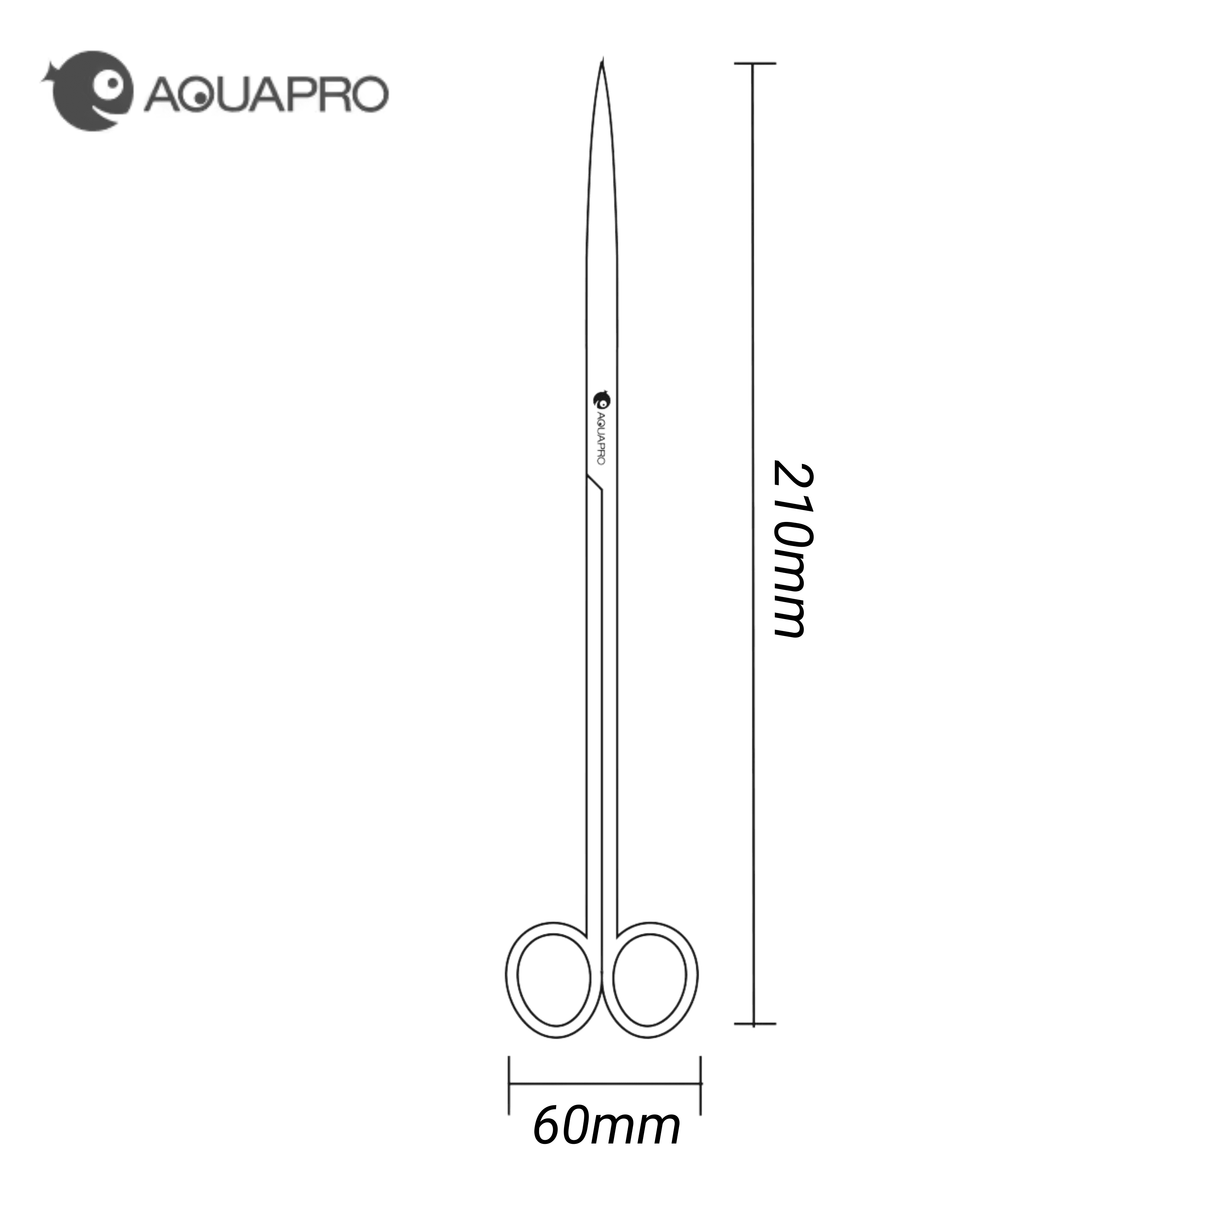 Aquapro Scissors 21cm Dimensions